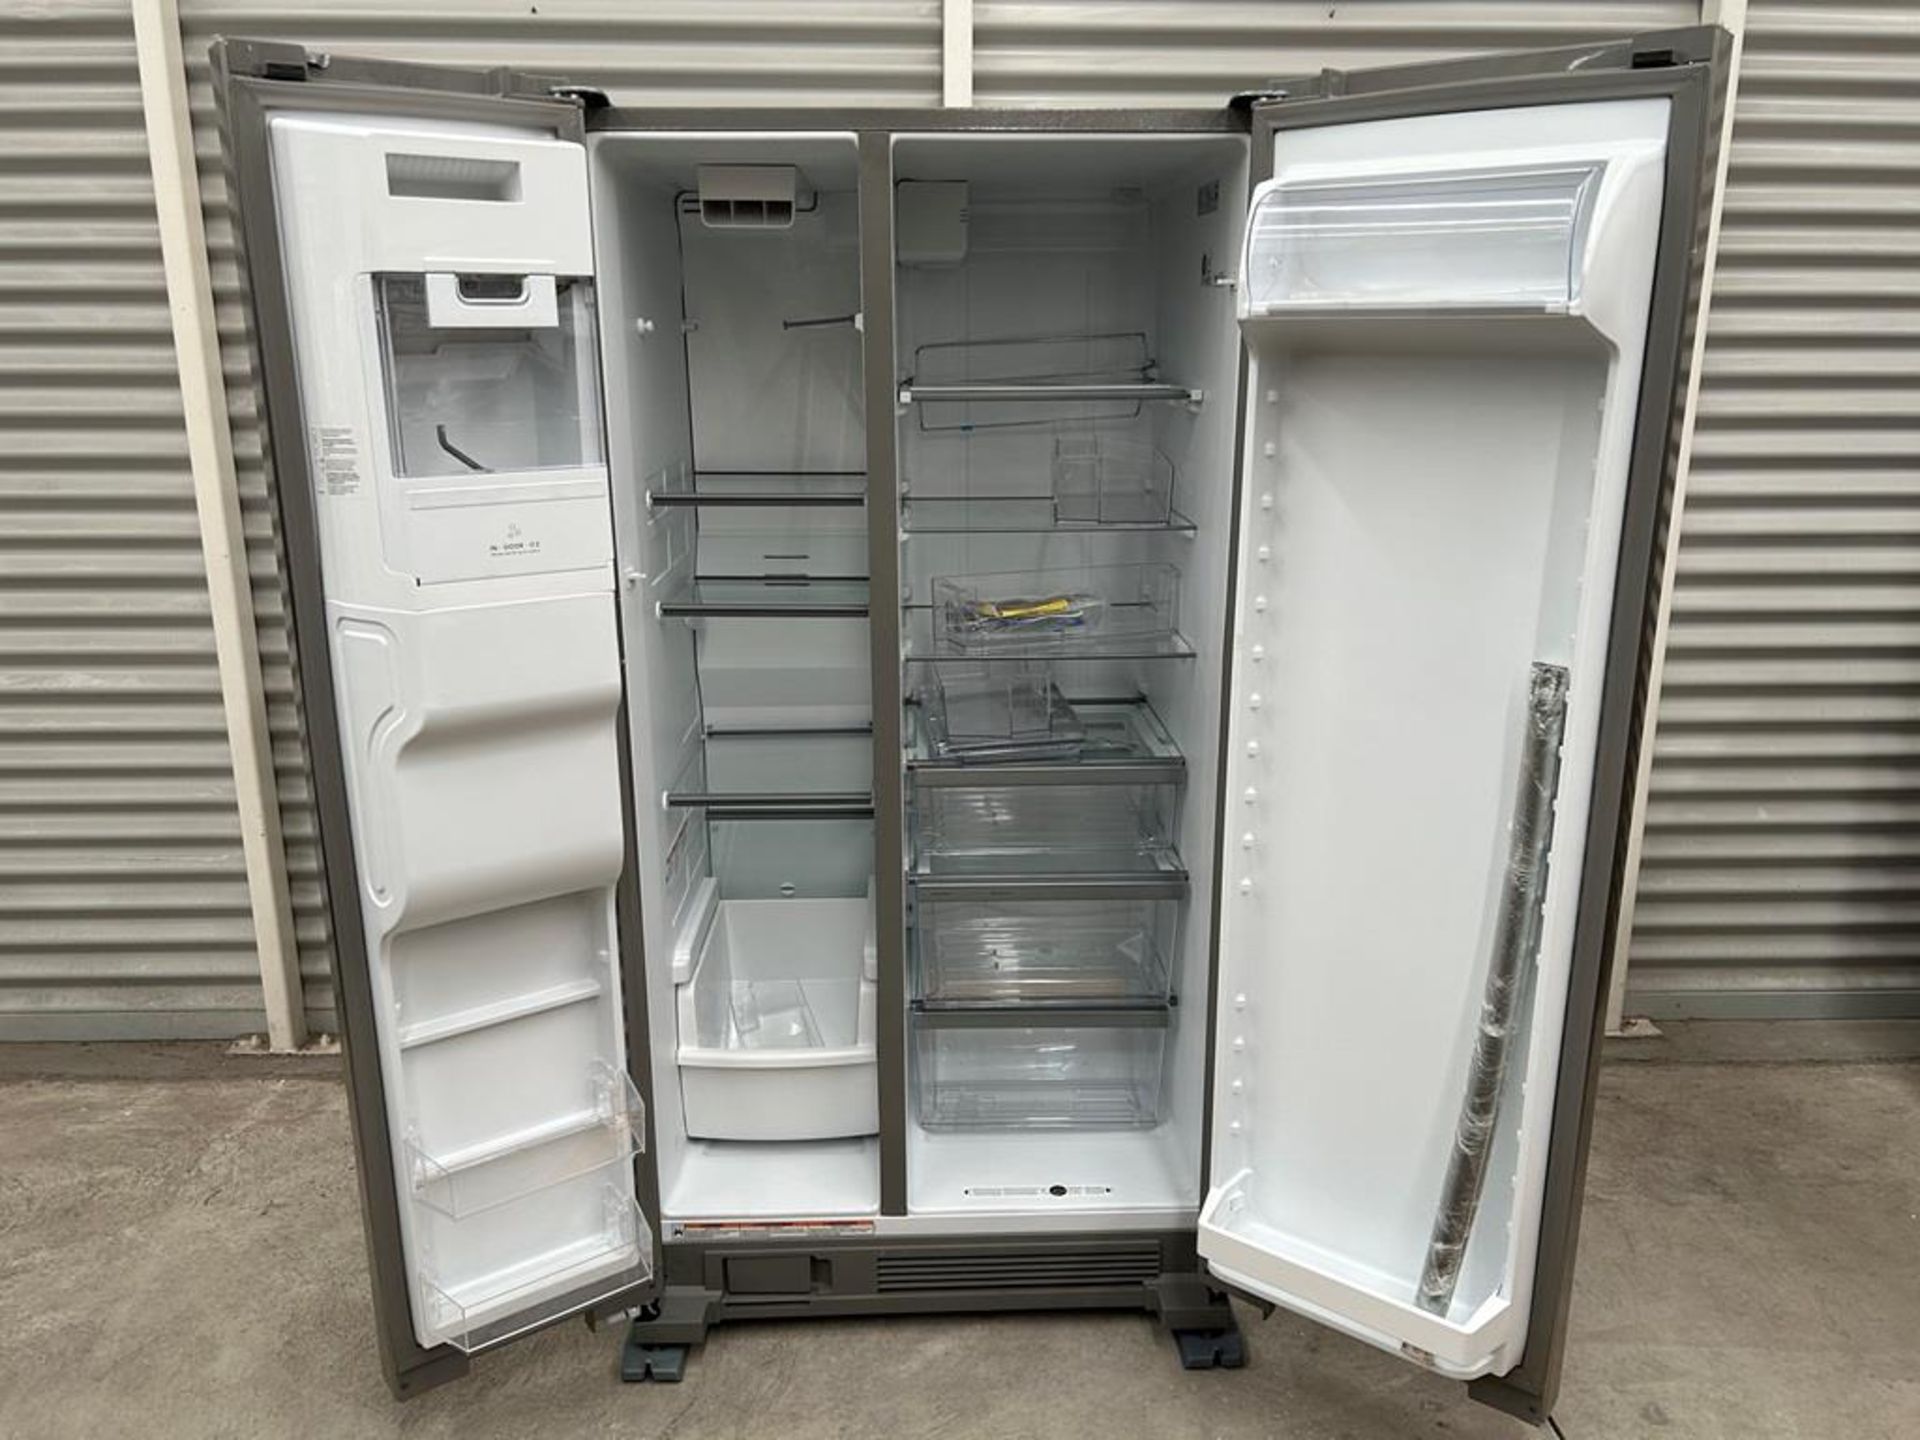 Refrigerador con dispensador de agua Marca WHIRPOOL, Modelo WD5720Z, Serie 25184, Color GRIS (Equip - Image 4 of 11